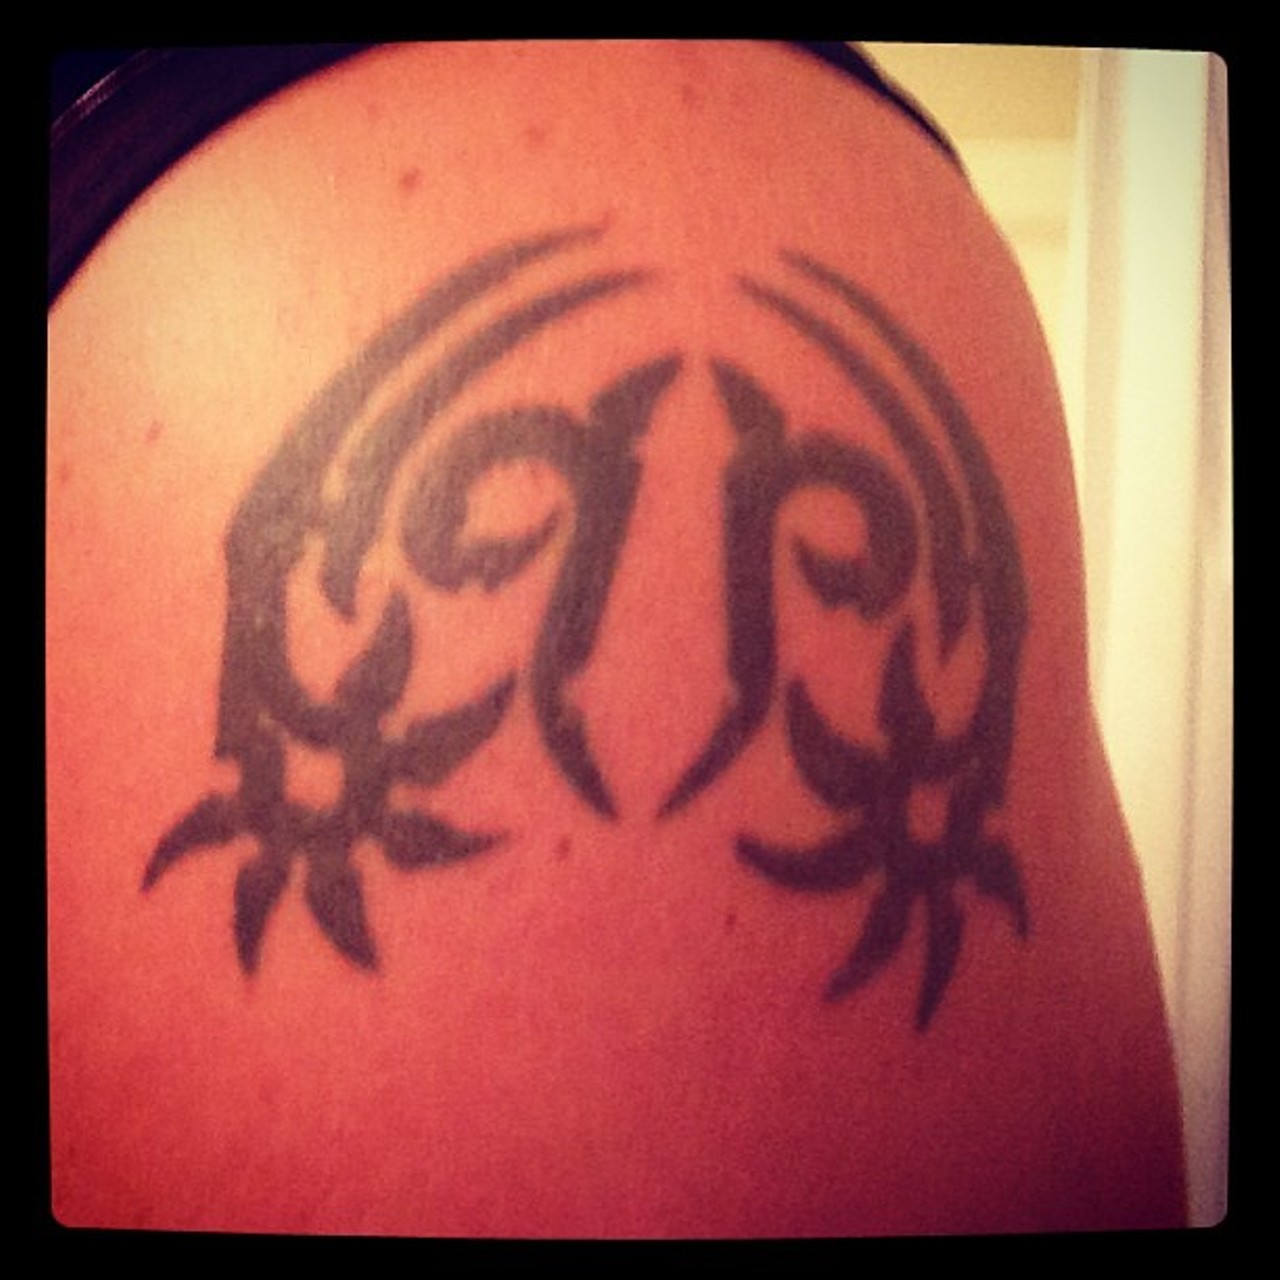 Friday The 13th Special  Anarchy Tattoos Orlando  Facebook